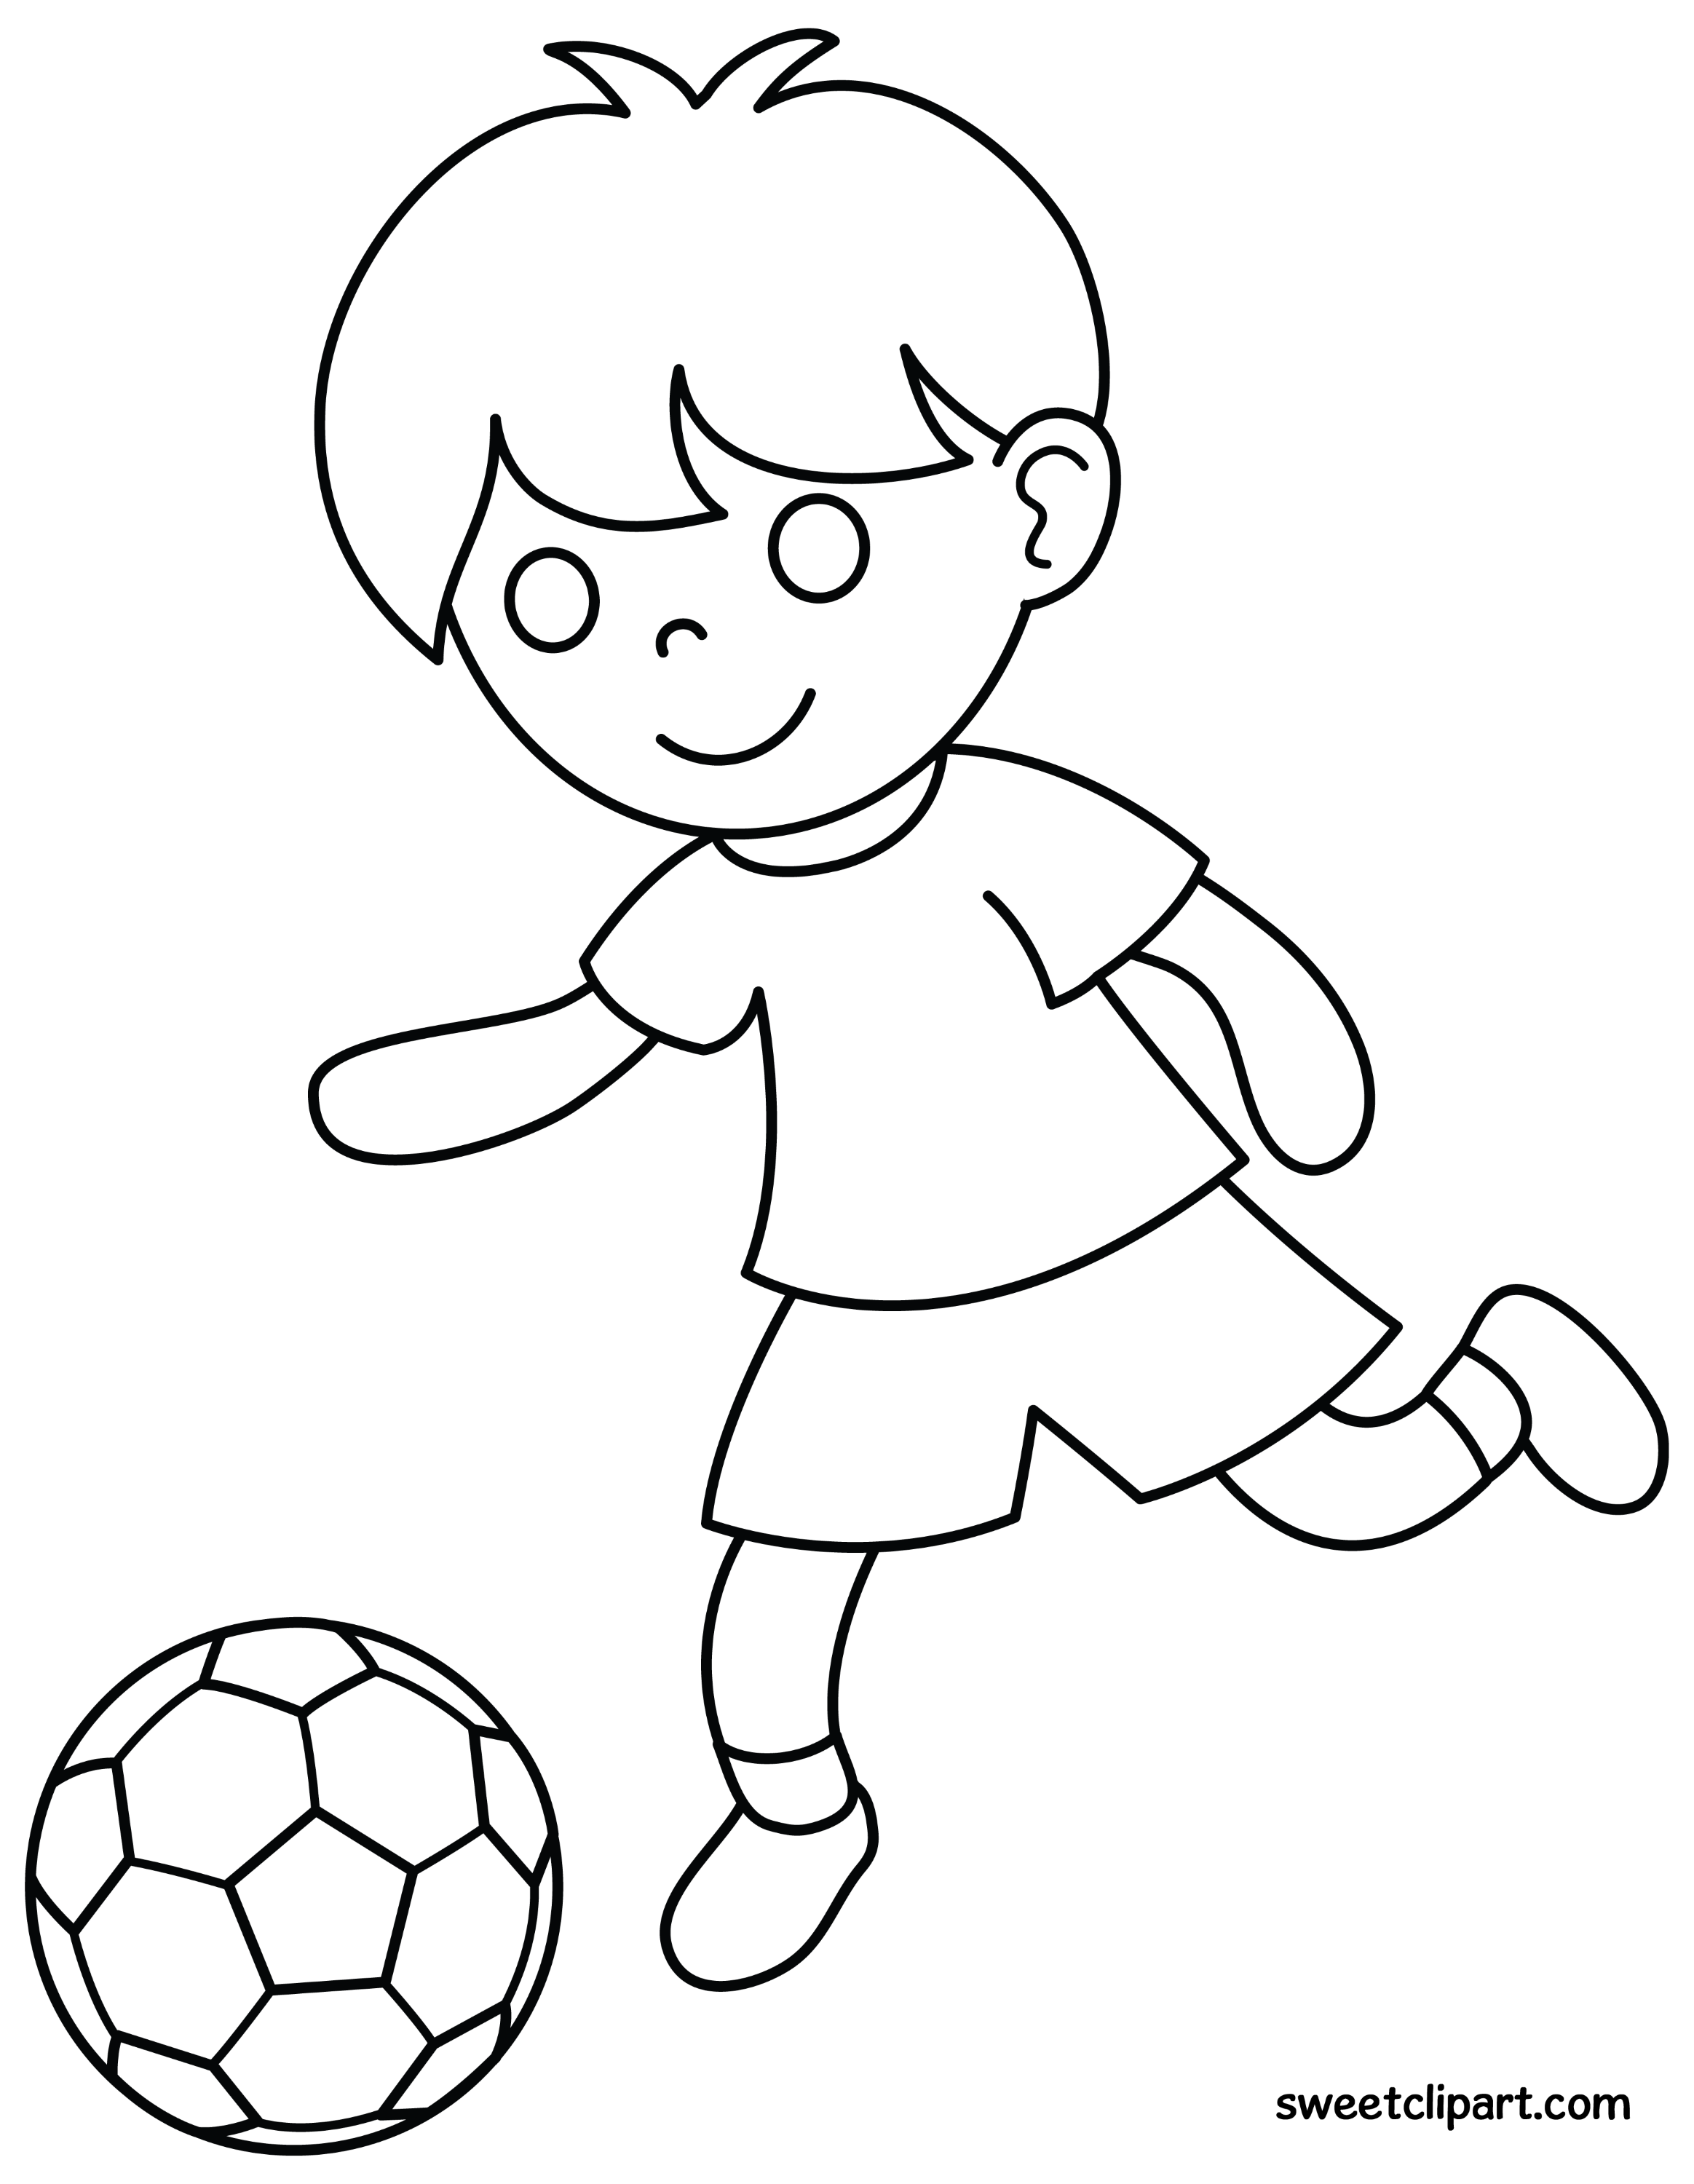 Boy Playing Football Drawing - Football drawing ball boy, ball, white ...